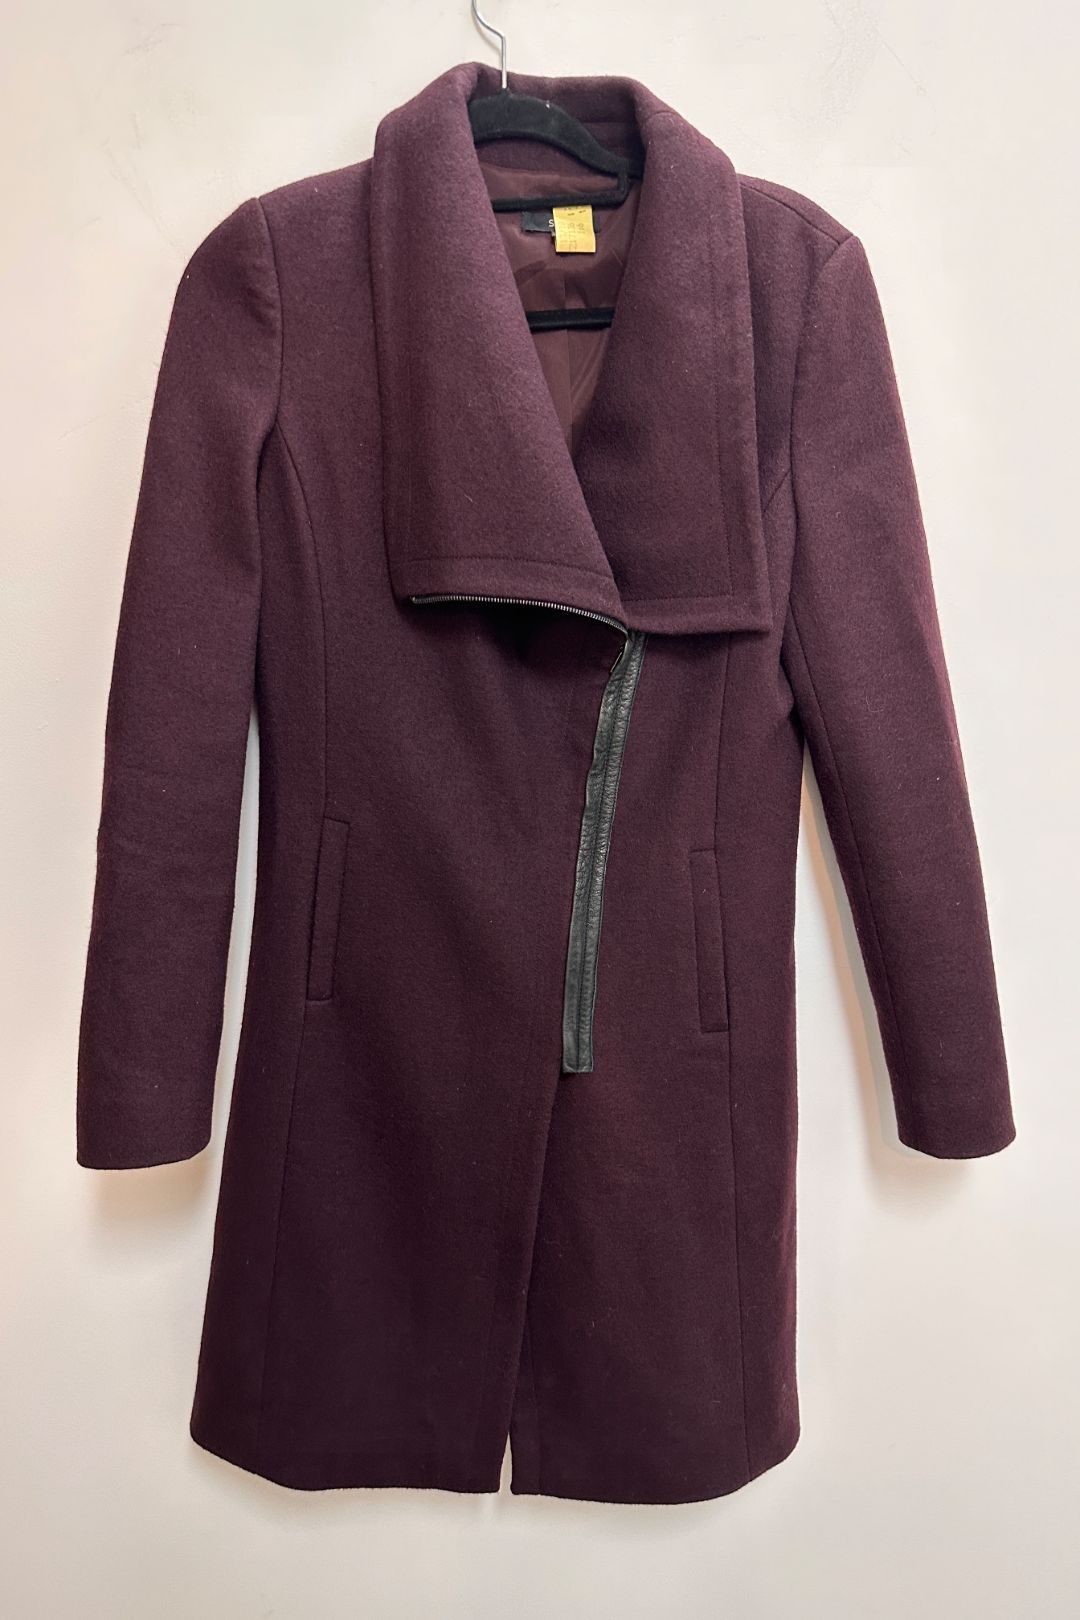 Saba Wool Blend Zip Up Coat in Burgundy